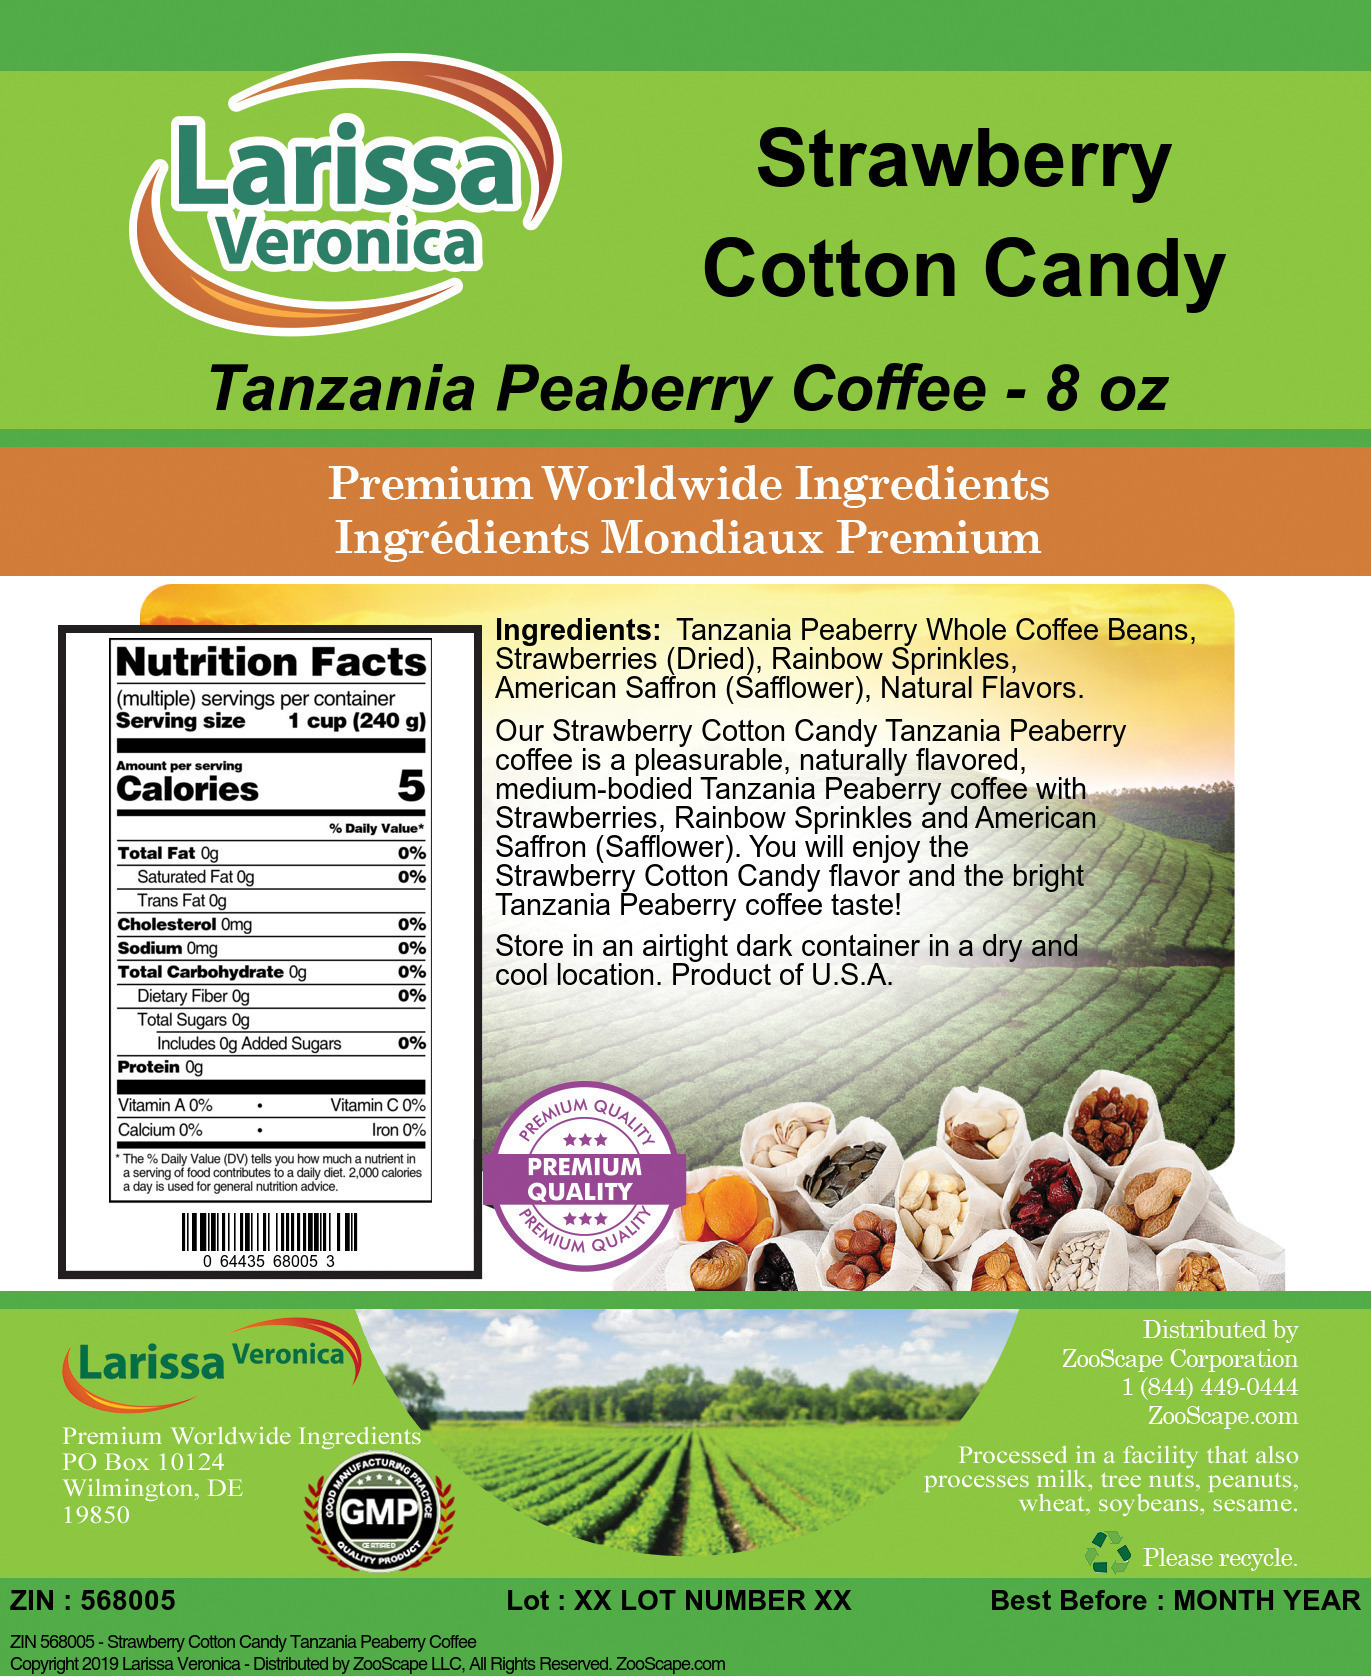 Strawberry Cotton Candy Tanzania Peaberry Coffee - Label